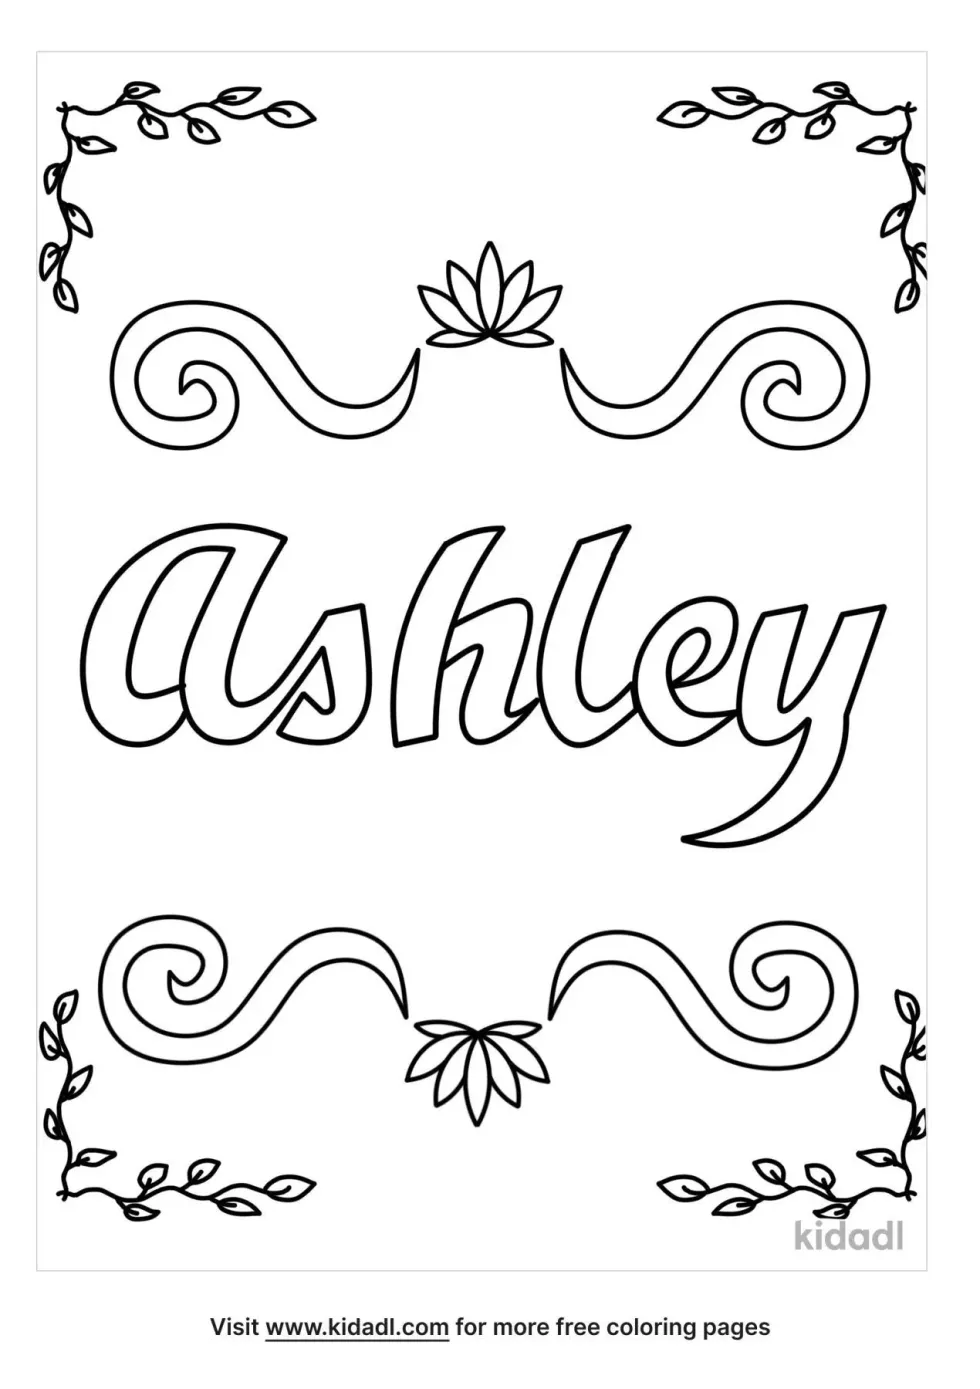 Name Ashley